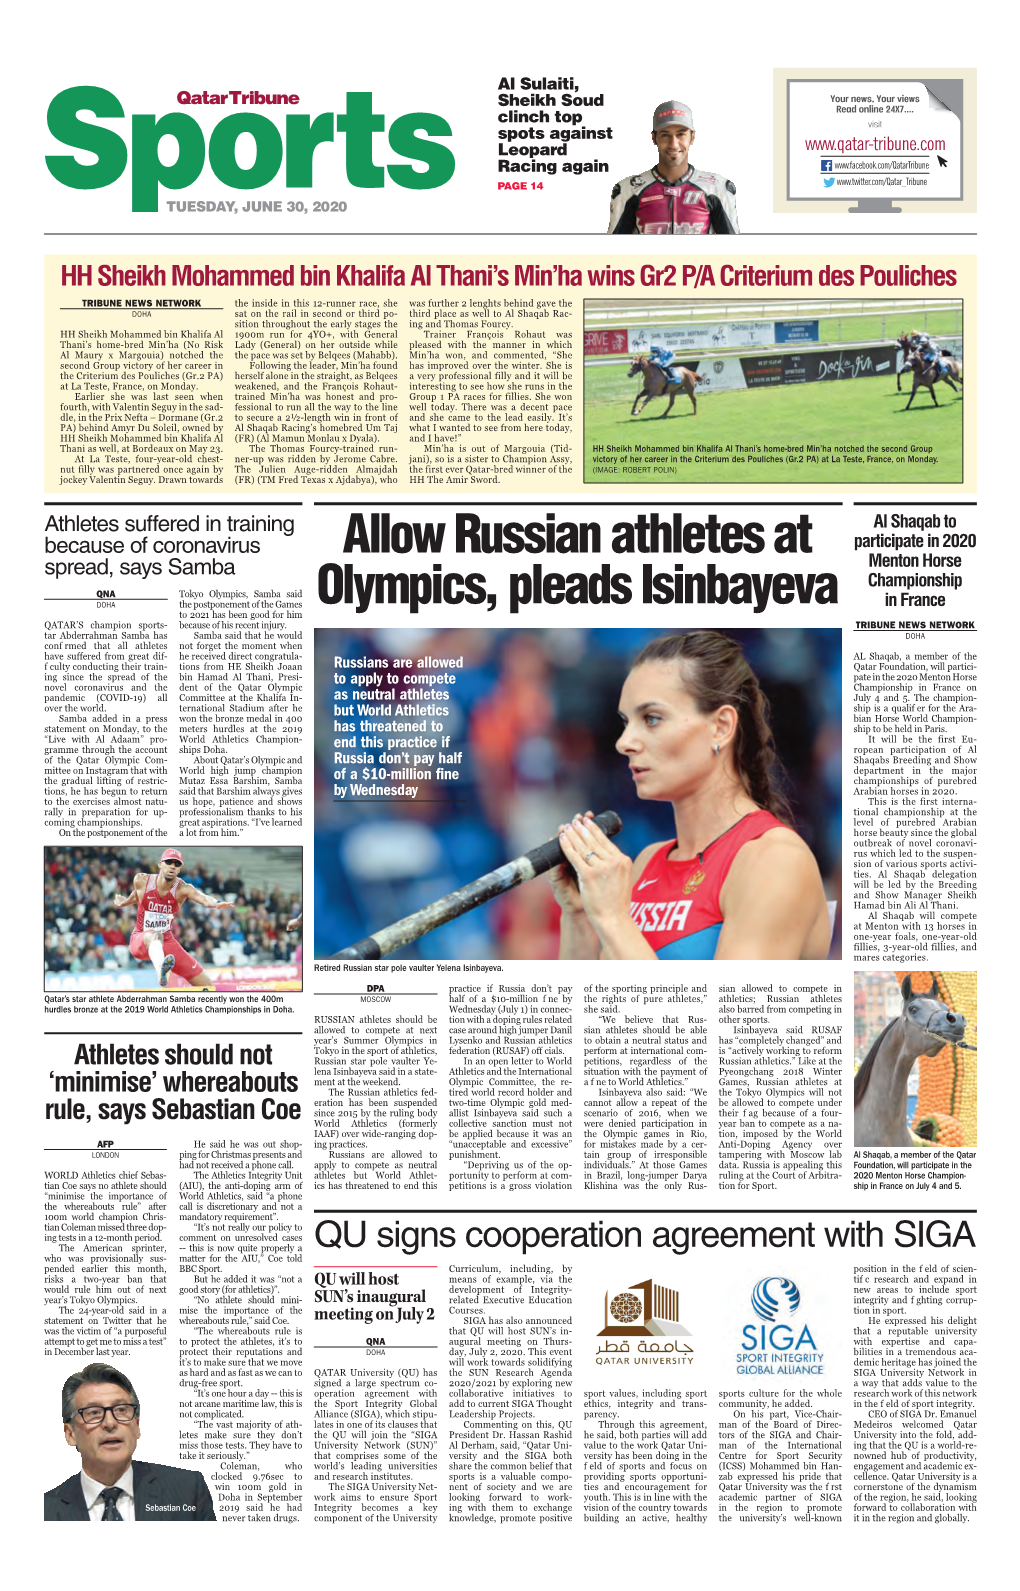 Allow Russian Athletes at Olympics, Pleads Isinbayeva